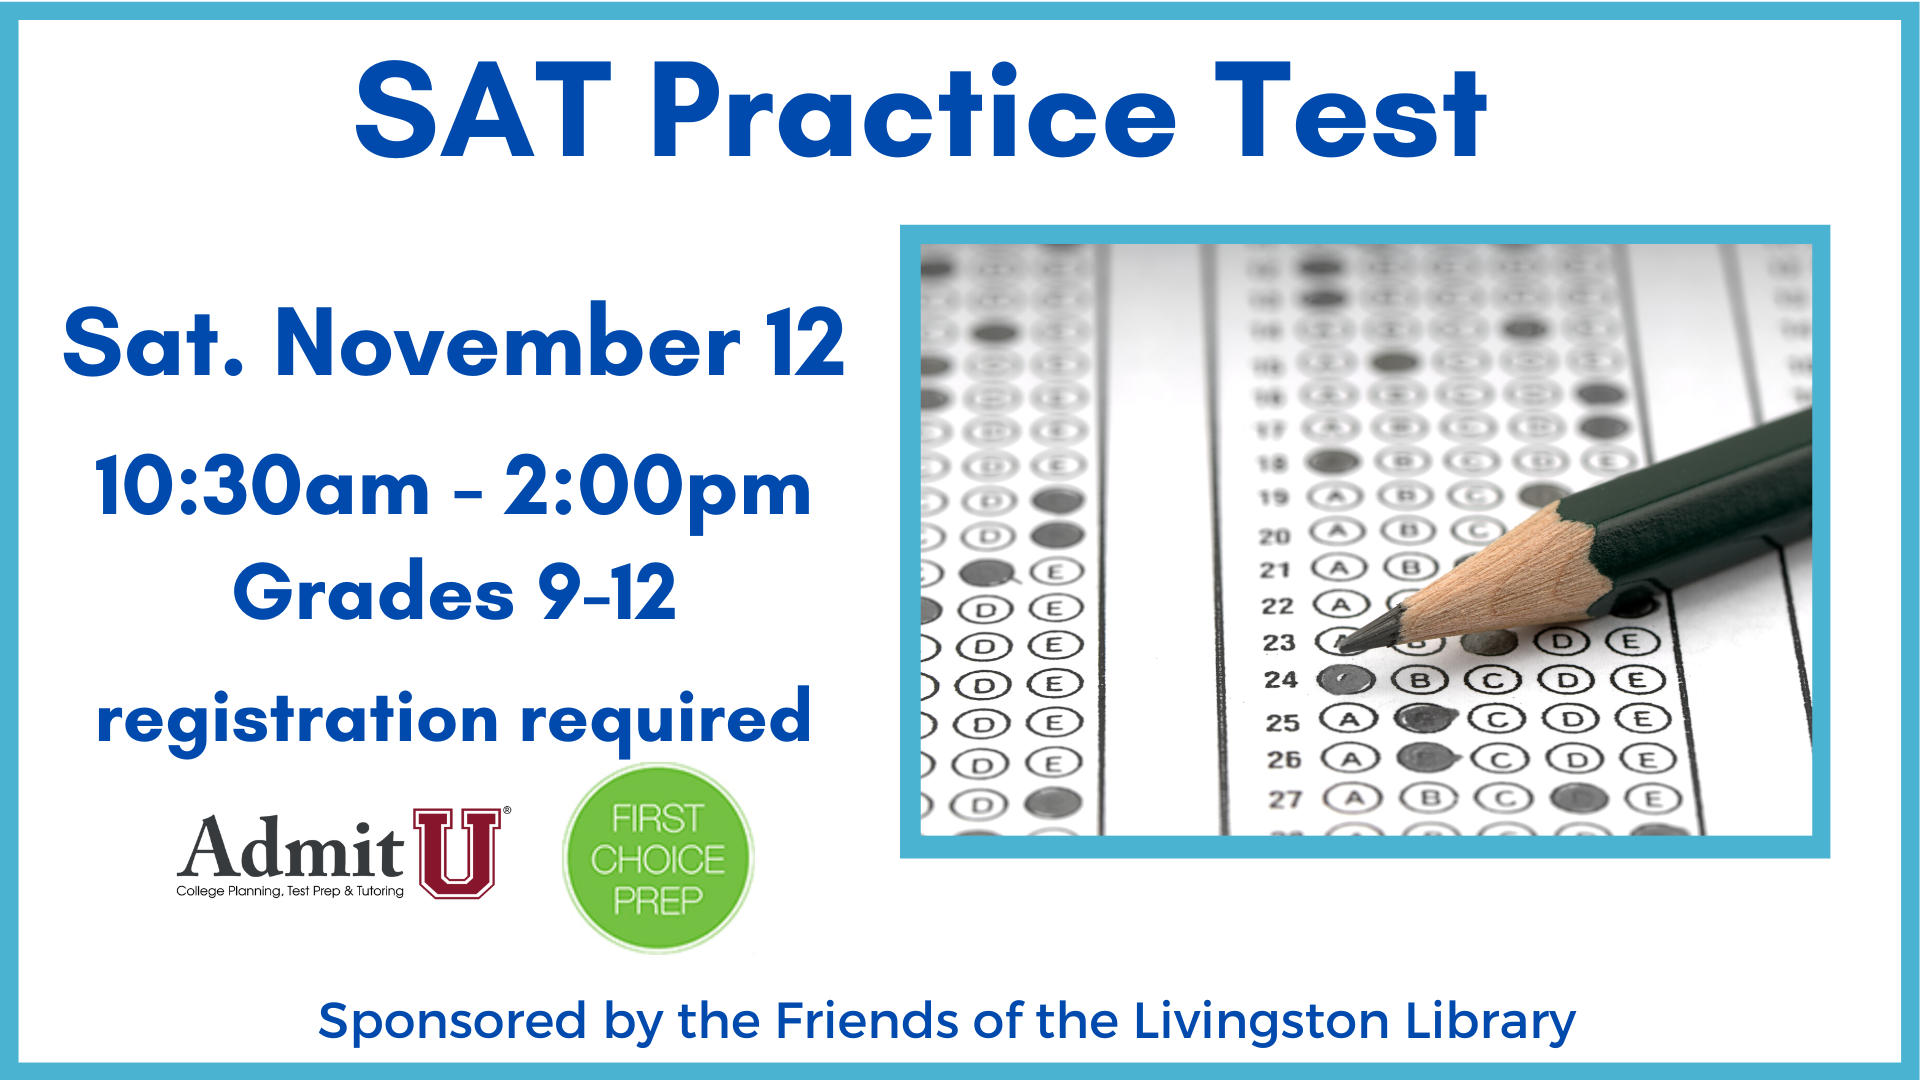 SAT Practice test promo